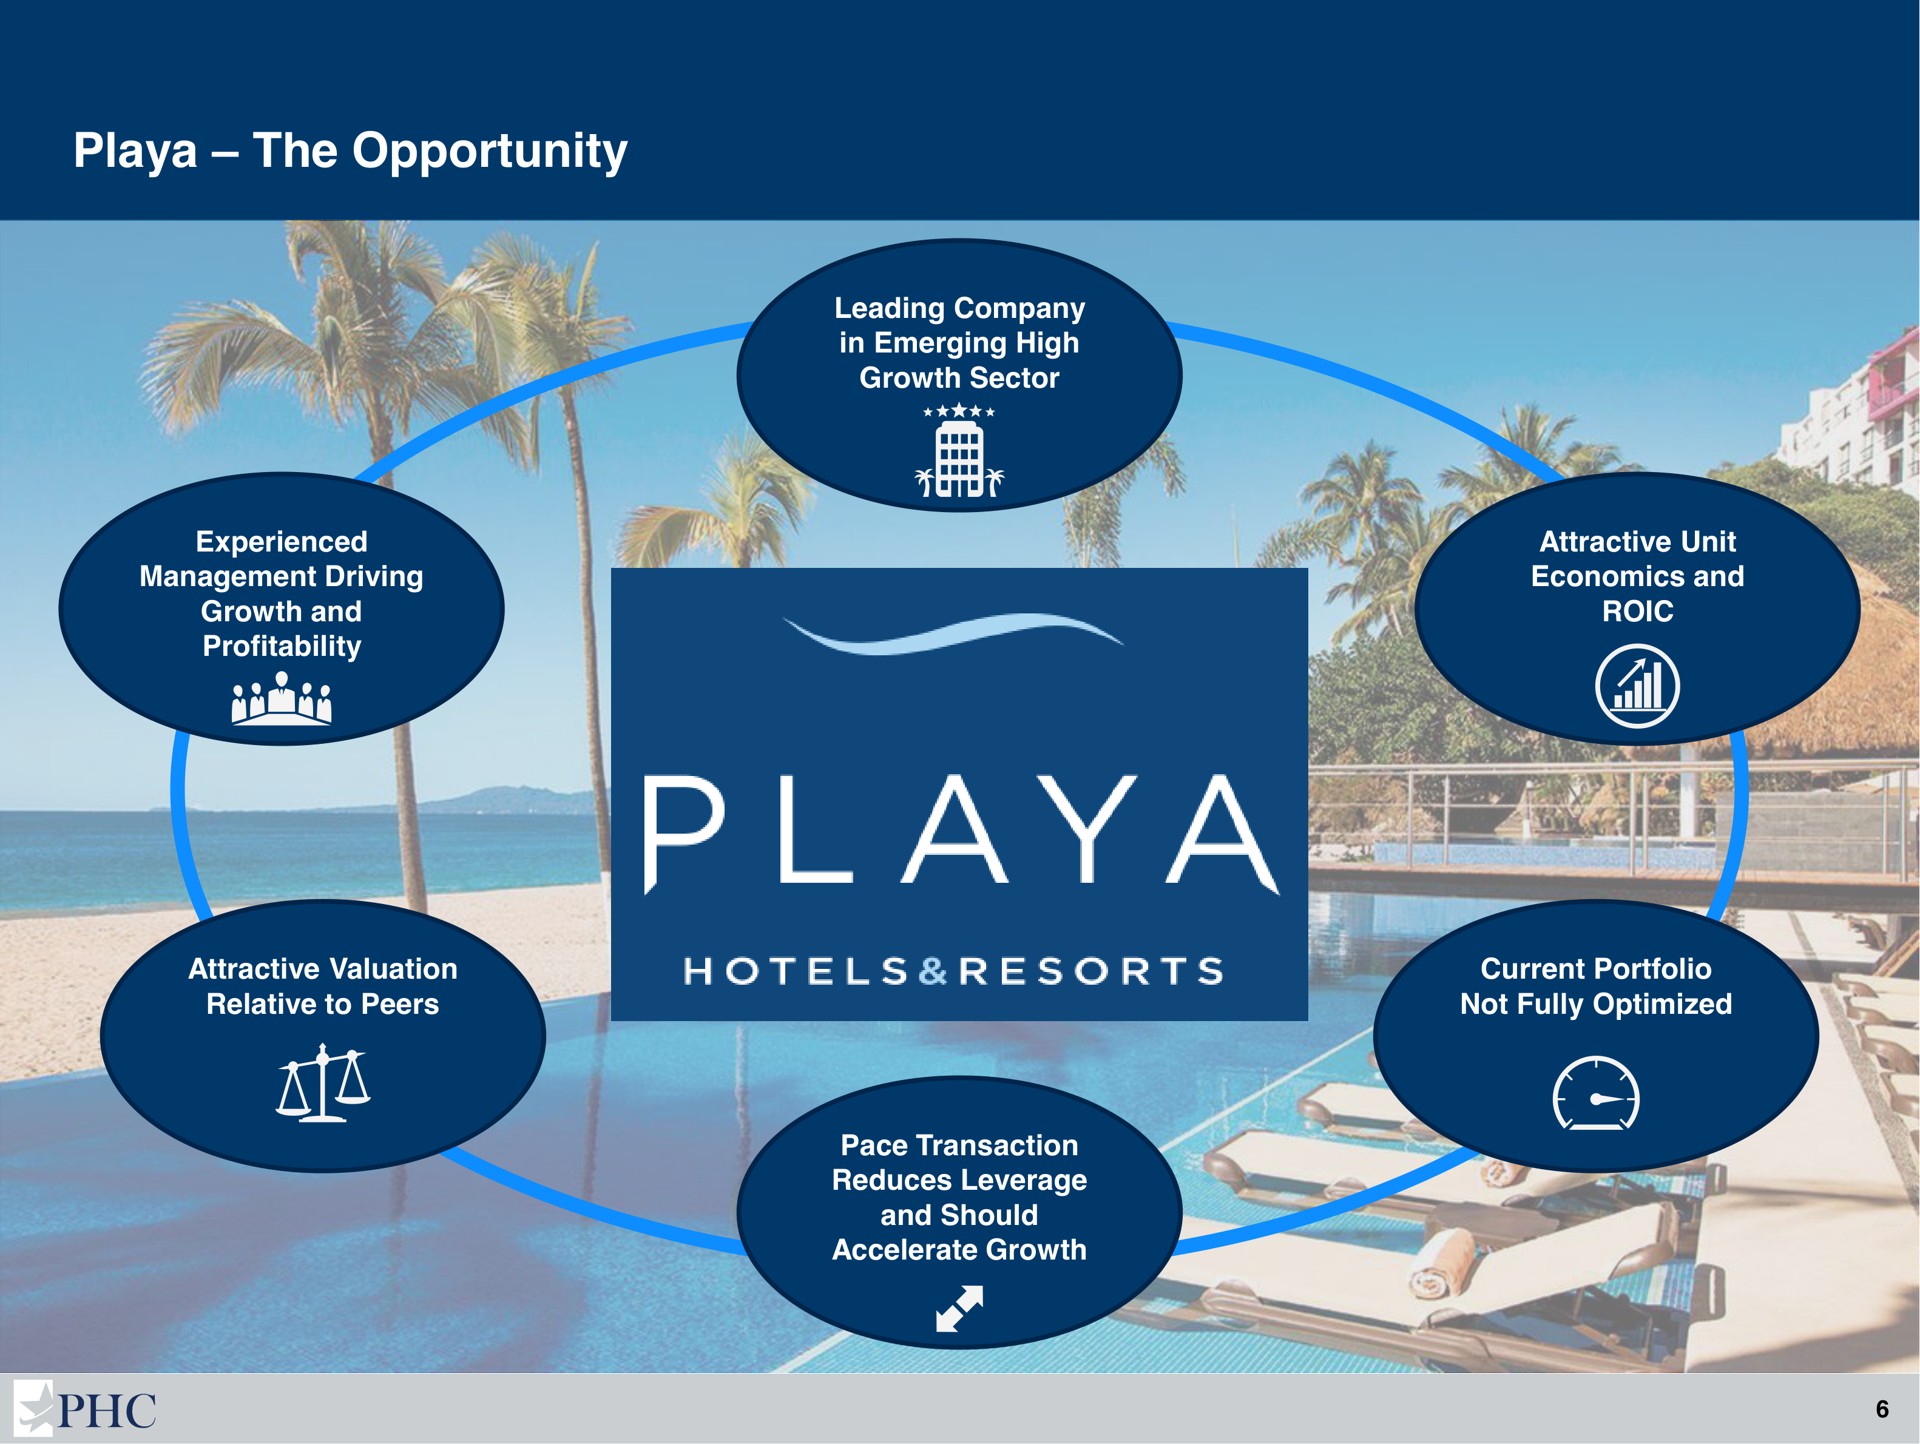 playa the opportunity | Playa Hotels